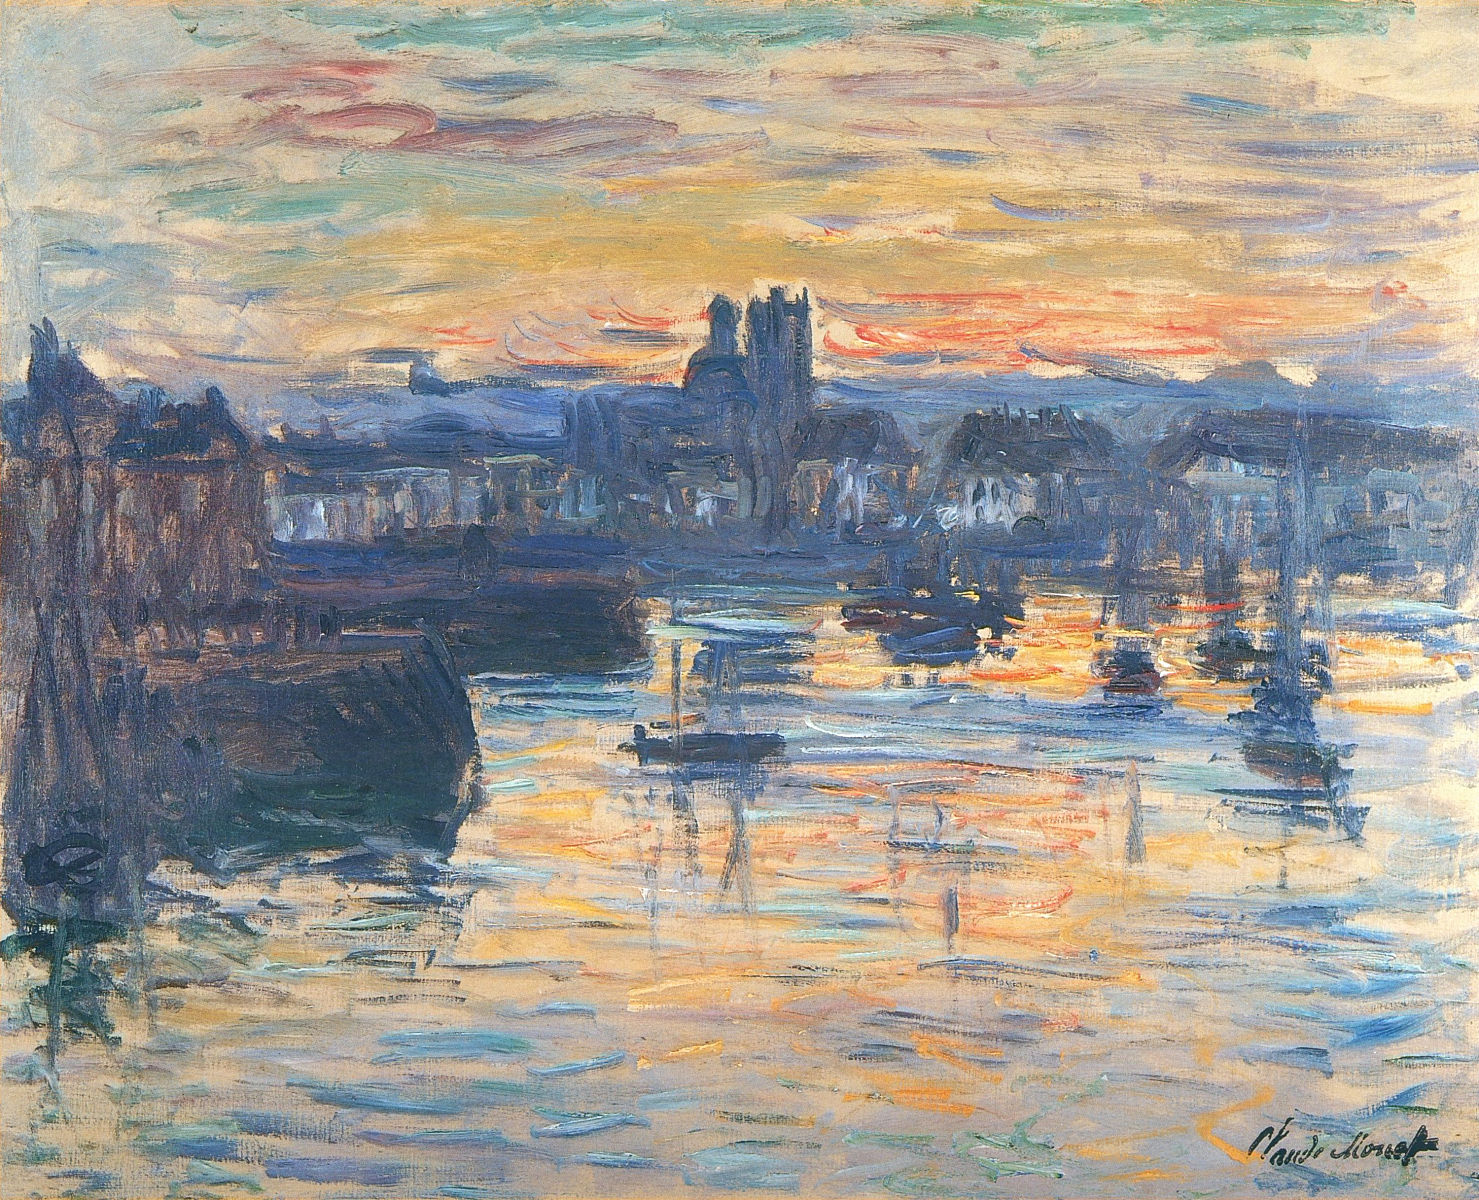 Claude+Monet-1840-1926 (590).jpg